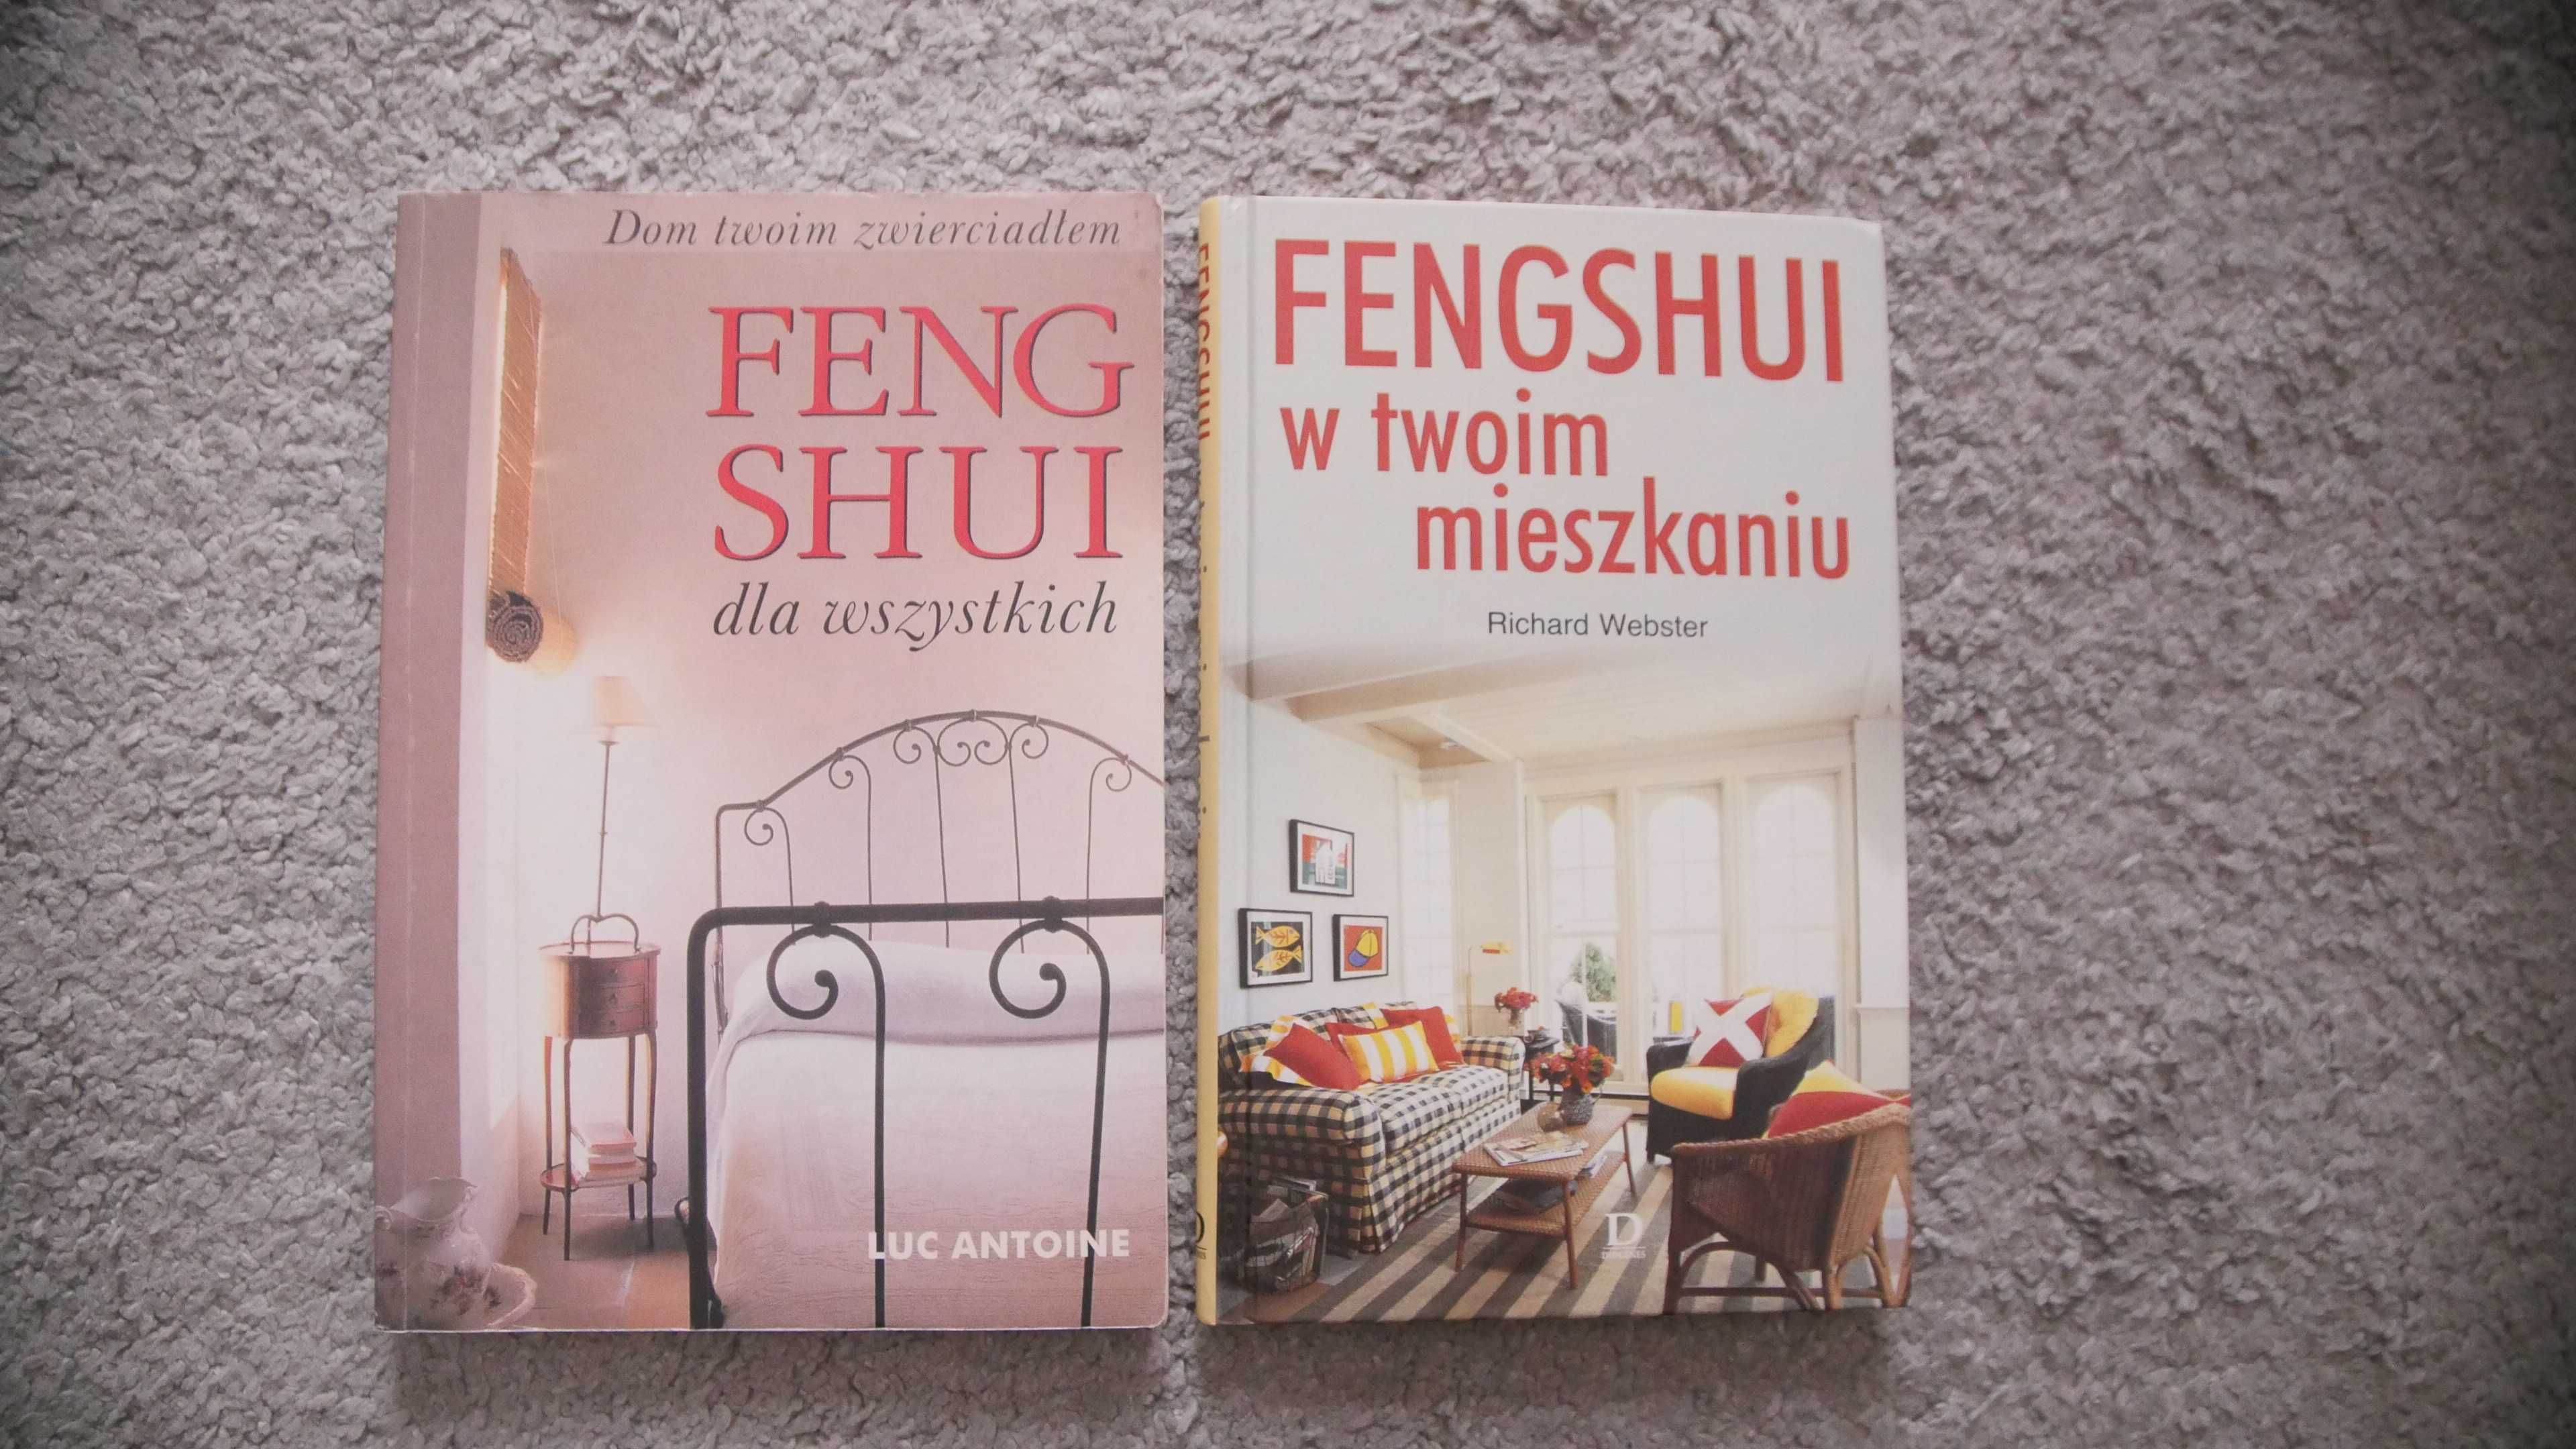 "Fengshui w twoim mieszkaniu"-R.Webster "Feng shui dla wszystkich"